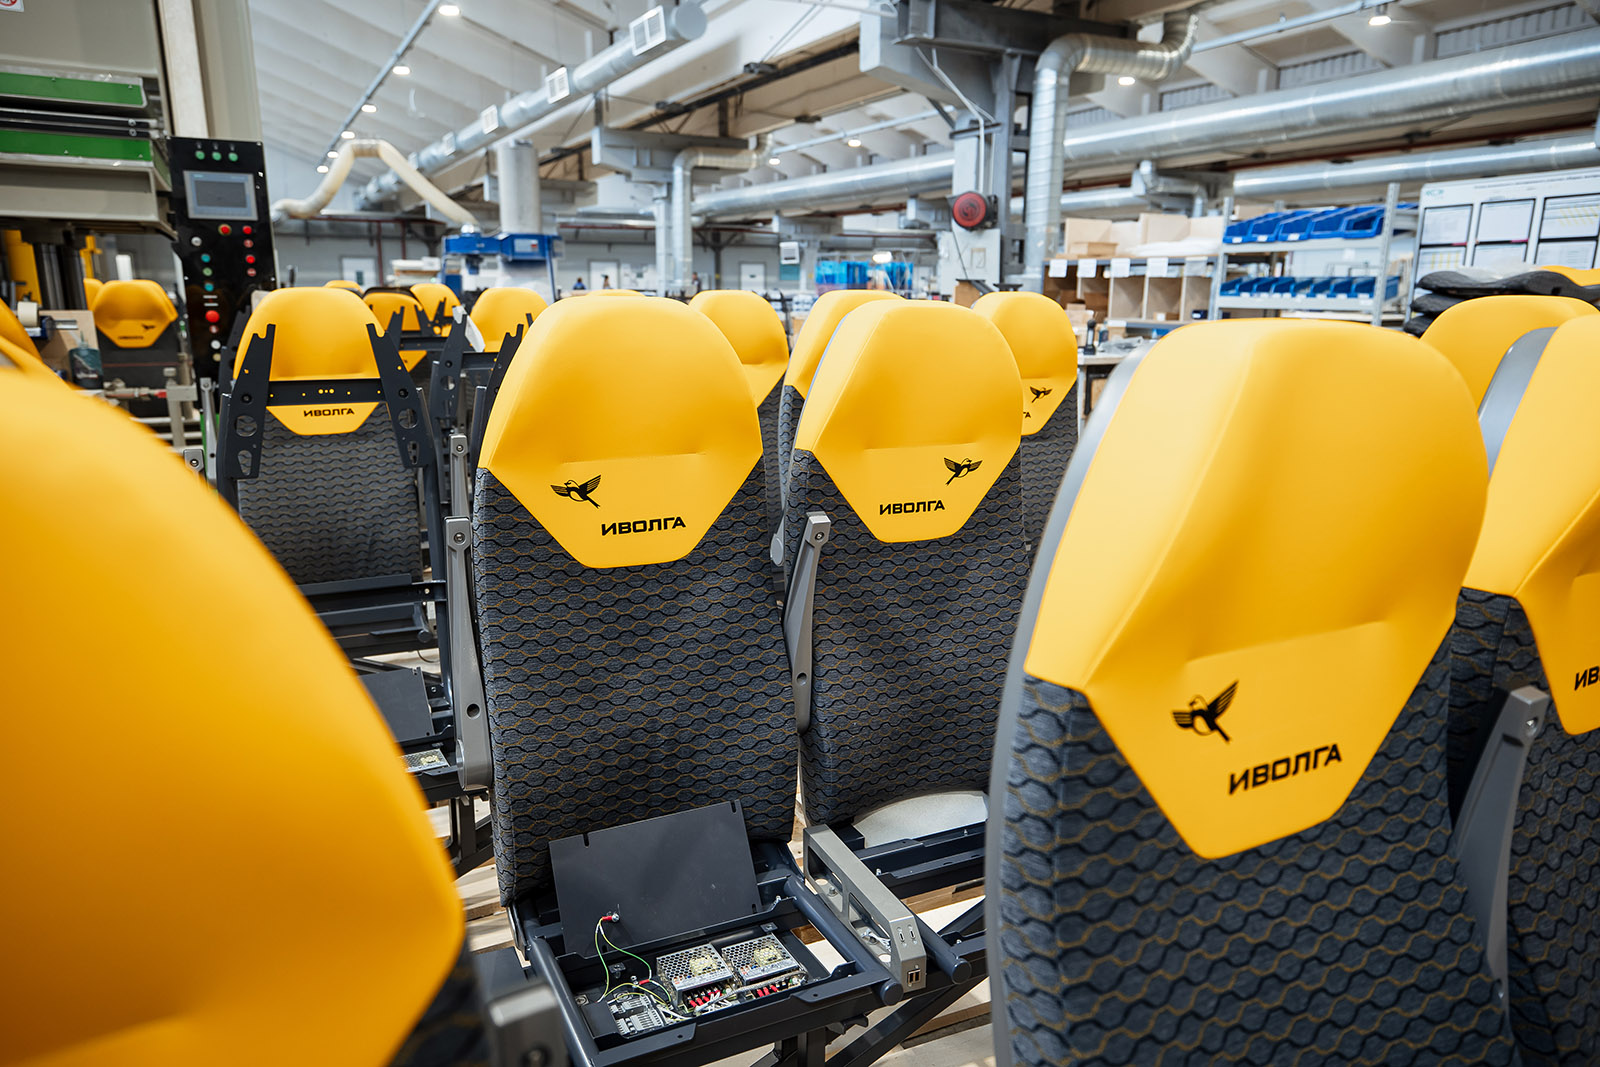 Seats for Ivolga 3.0 EMUs designed by KSC